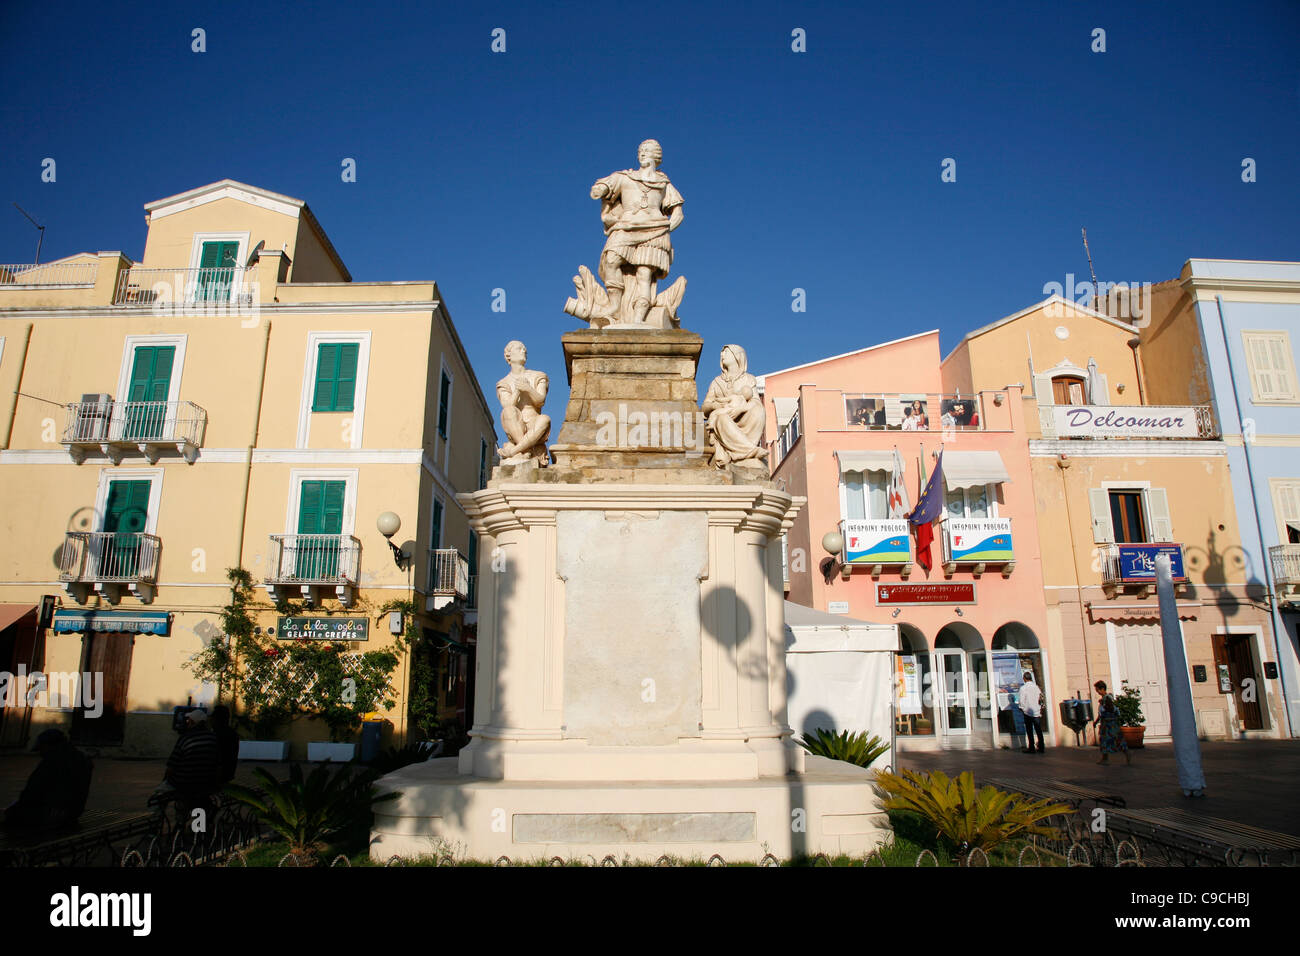 Street scene in Carloforte, San Pietro island, Sardinia, Italy. Stock Photo